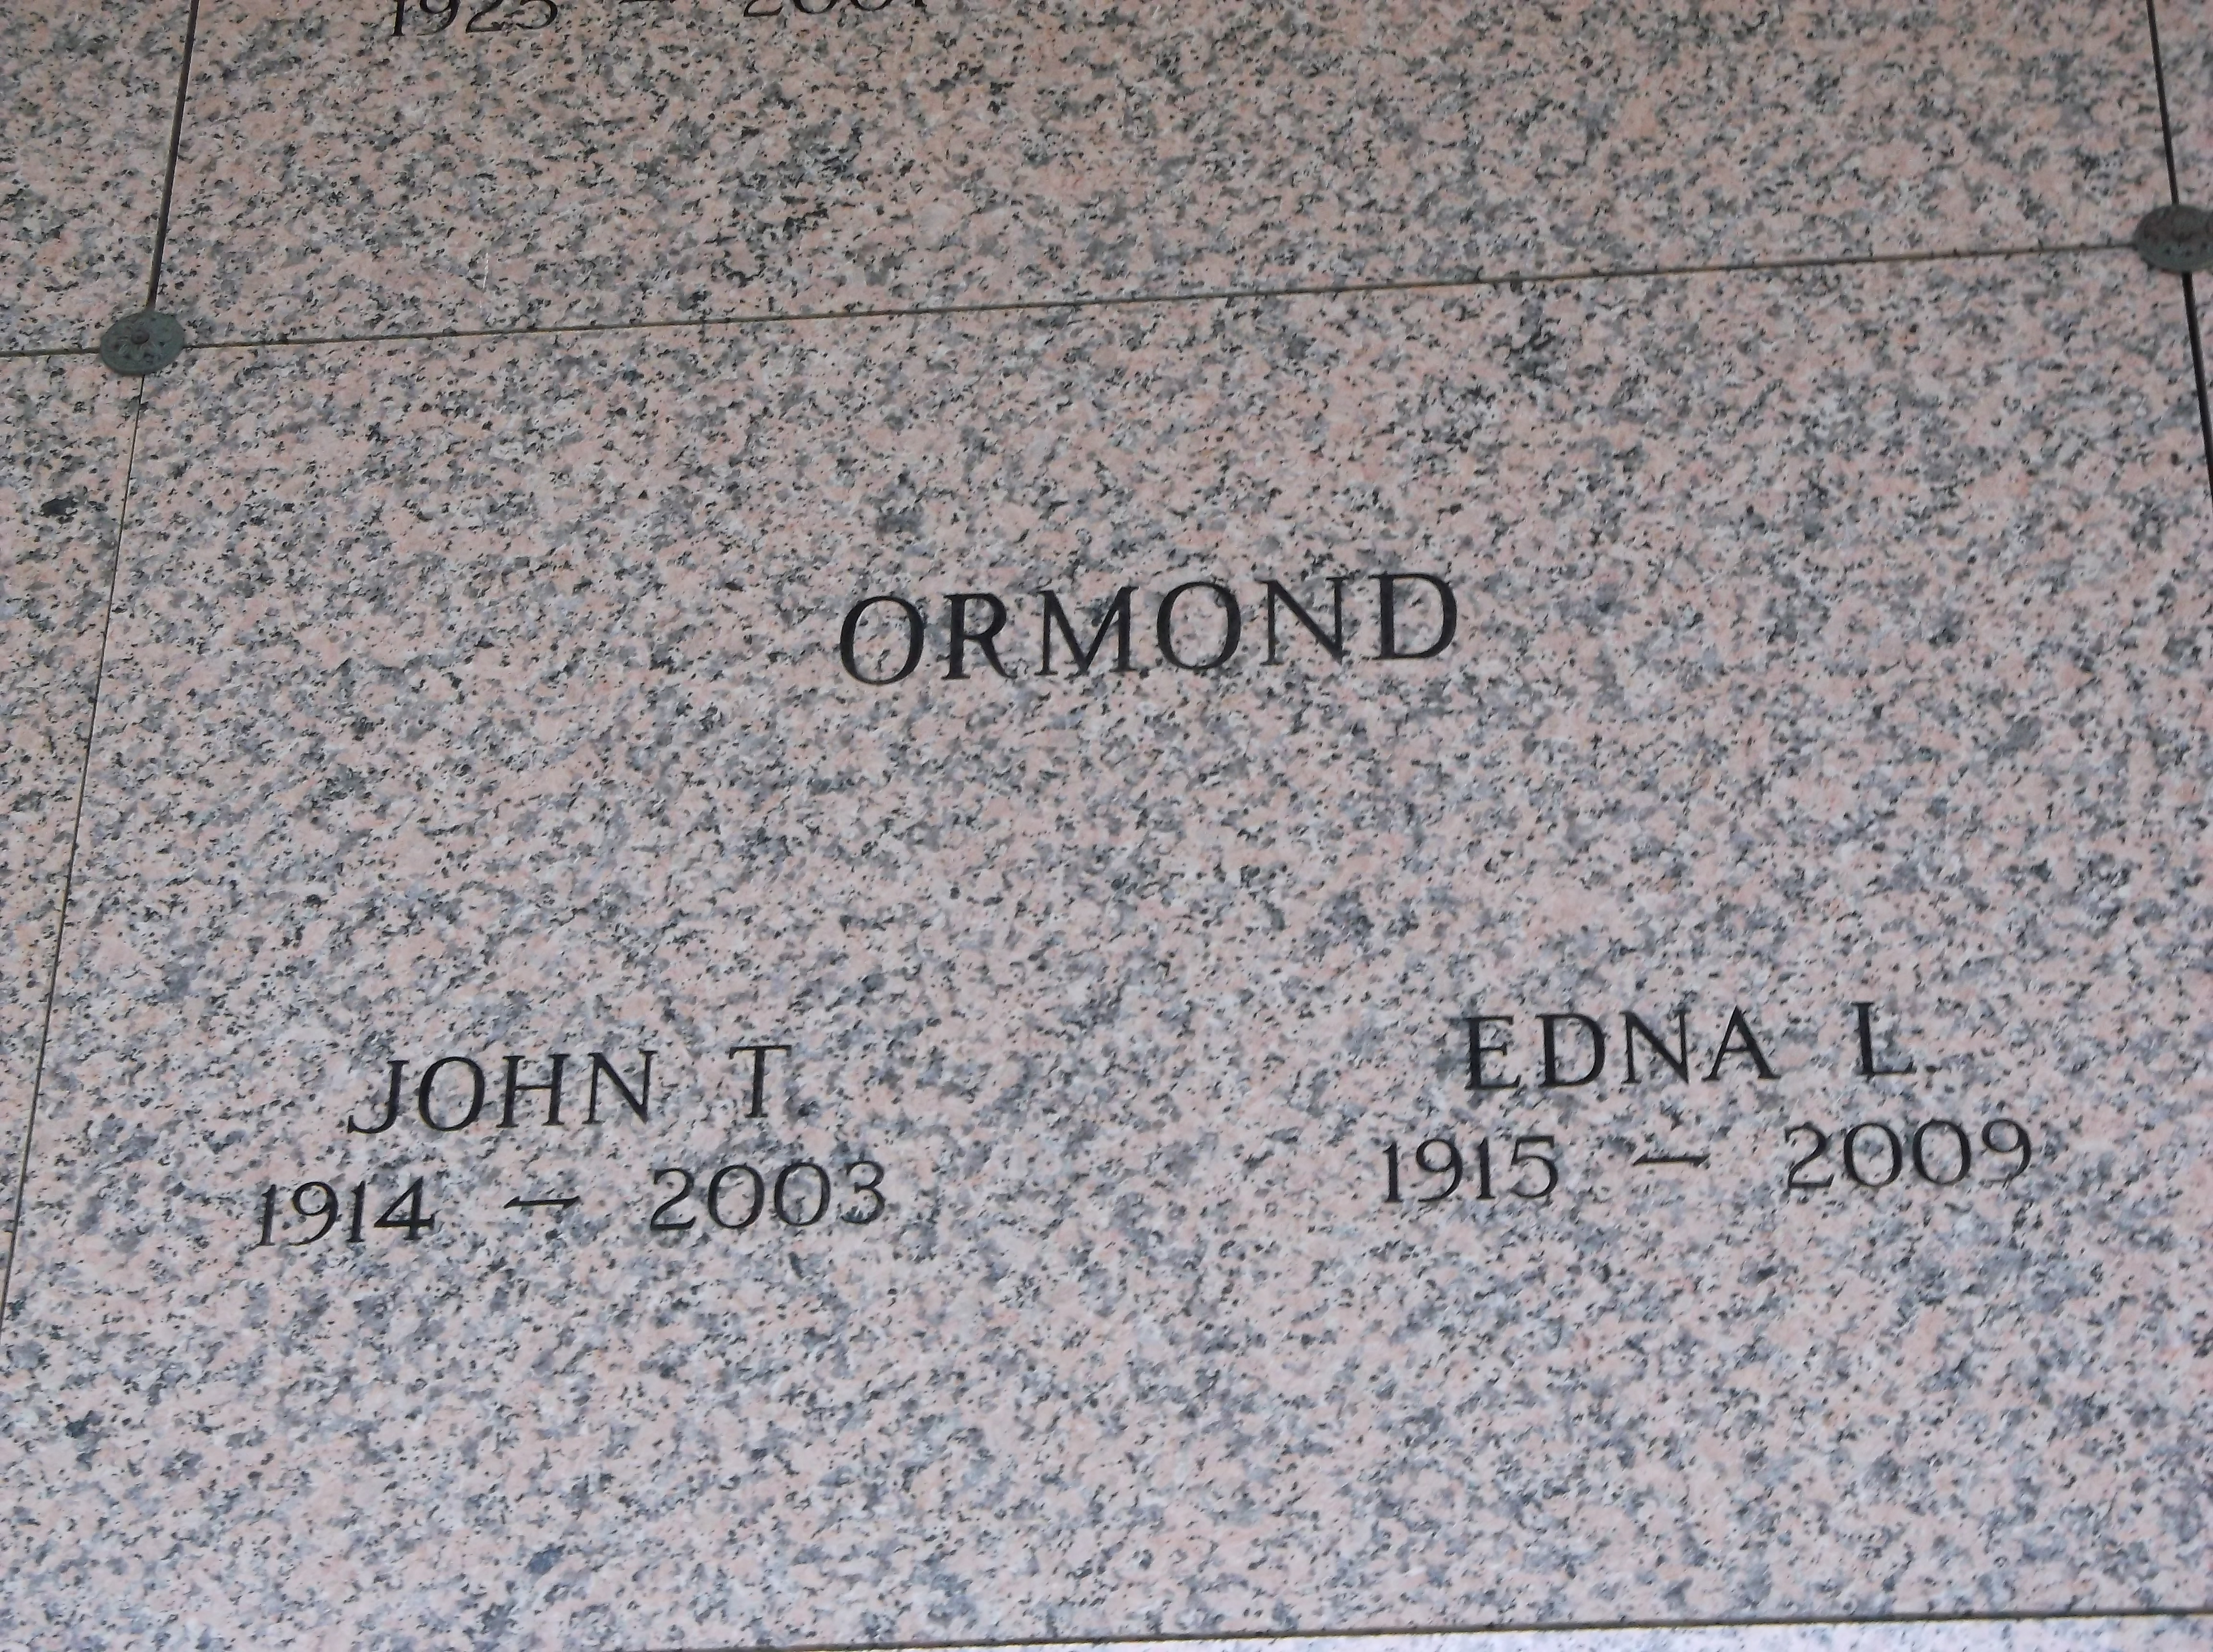 Edna L Ormond